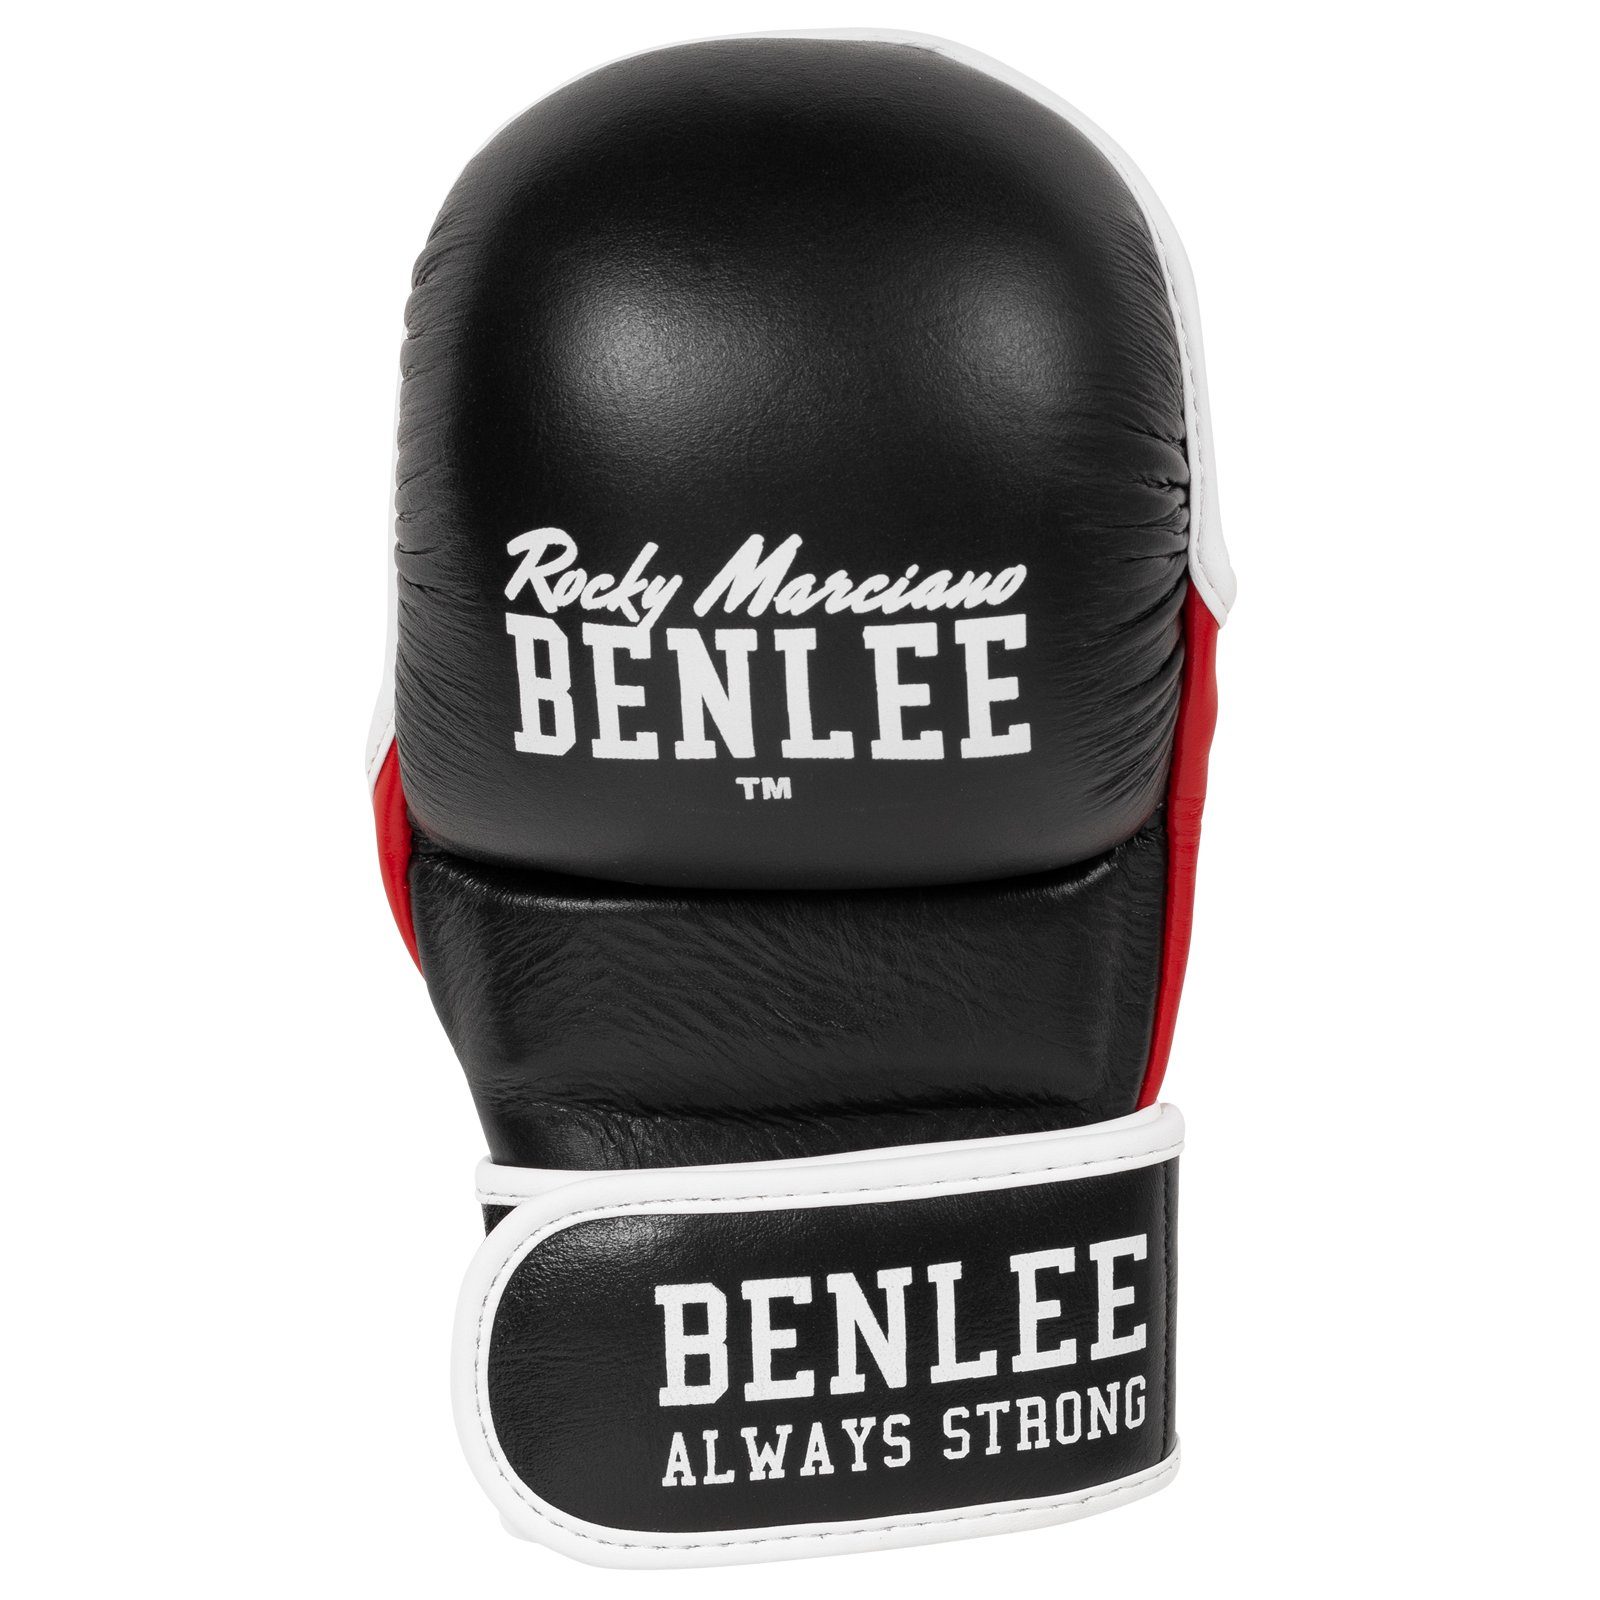 Boxhandschuhe Marciano Benlee Rocky STRIKER